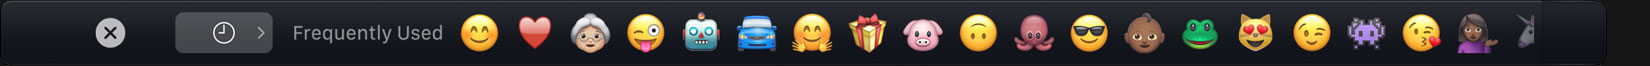 touchbar emoji